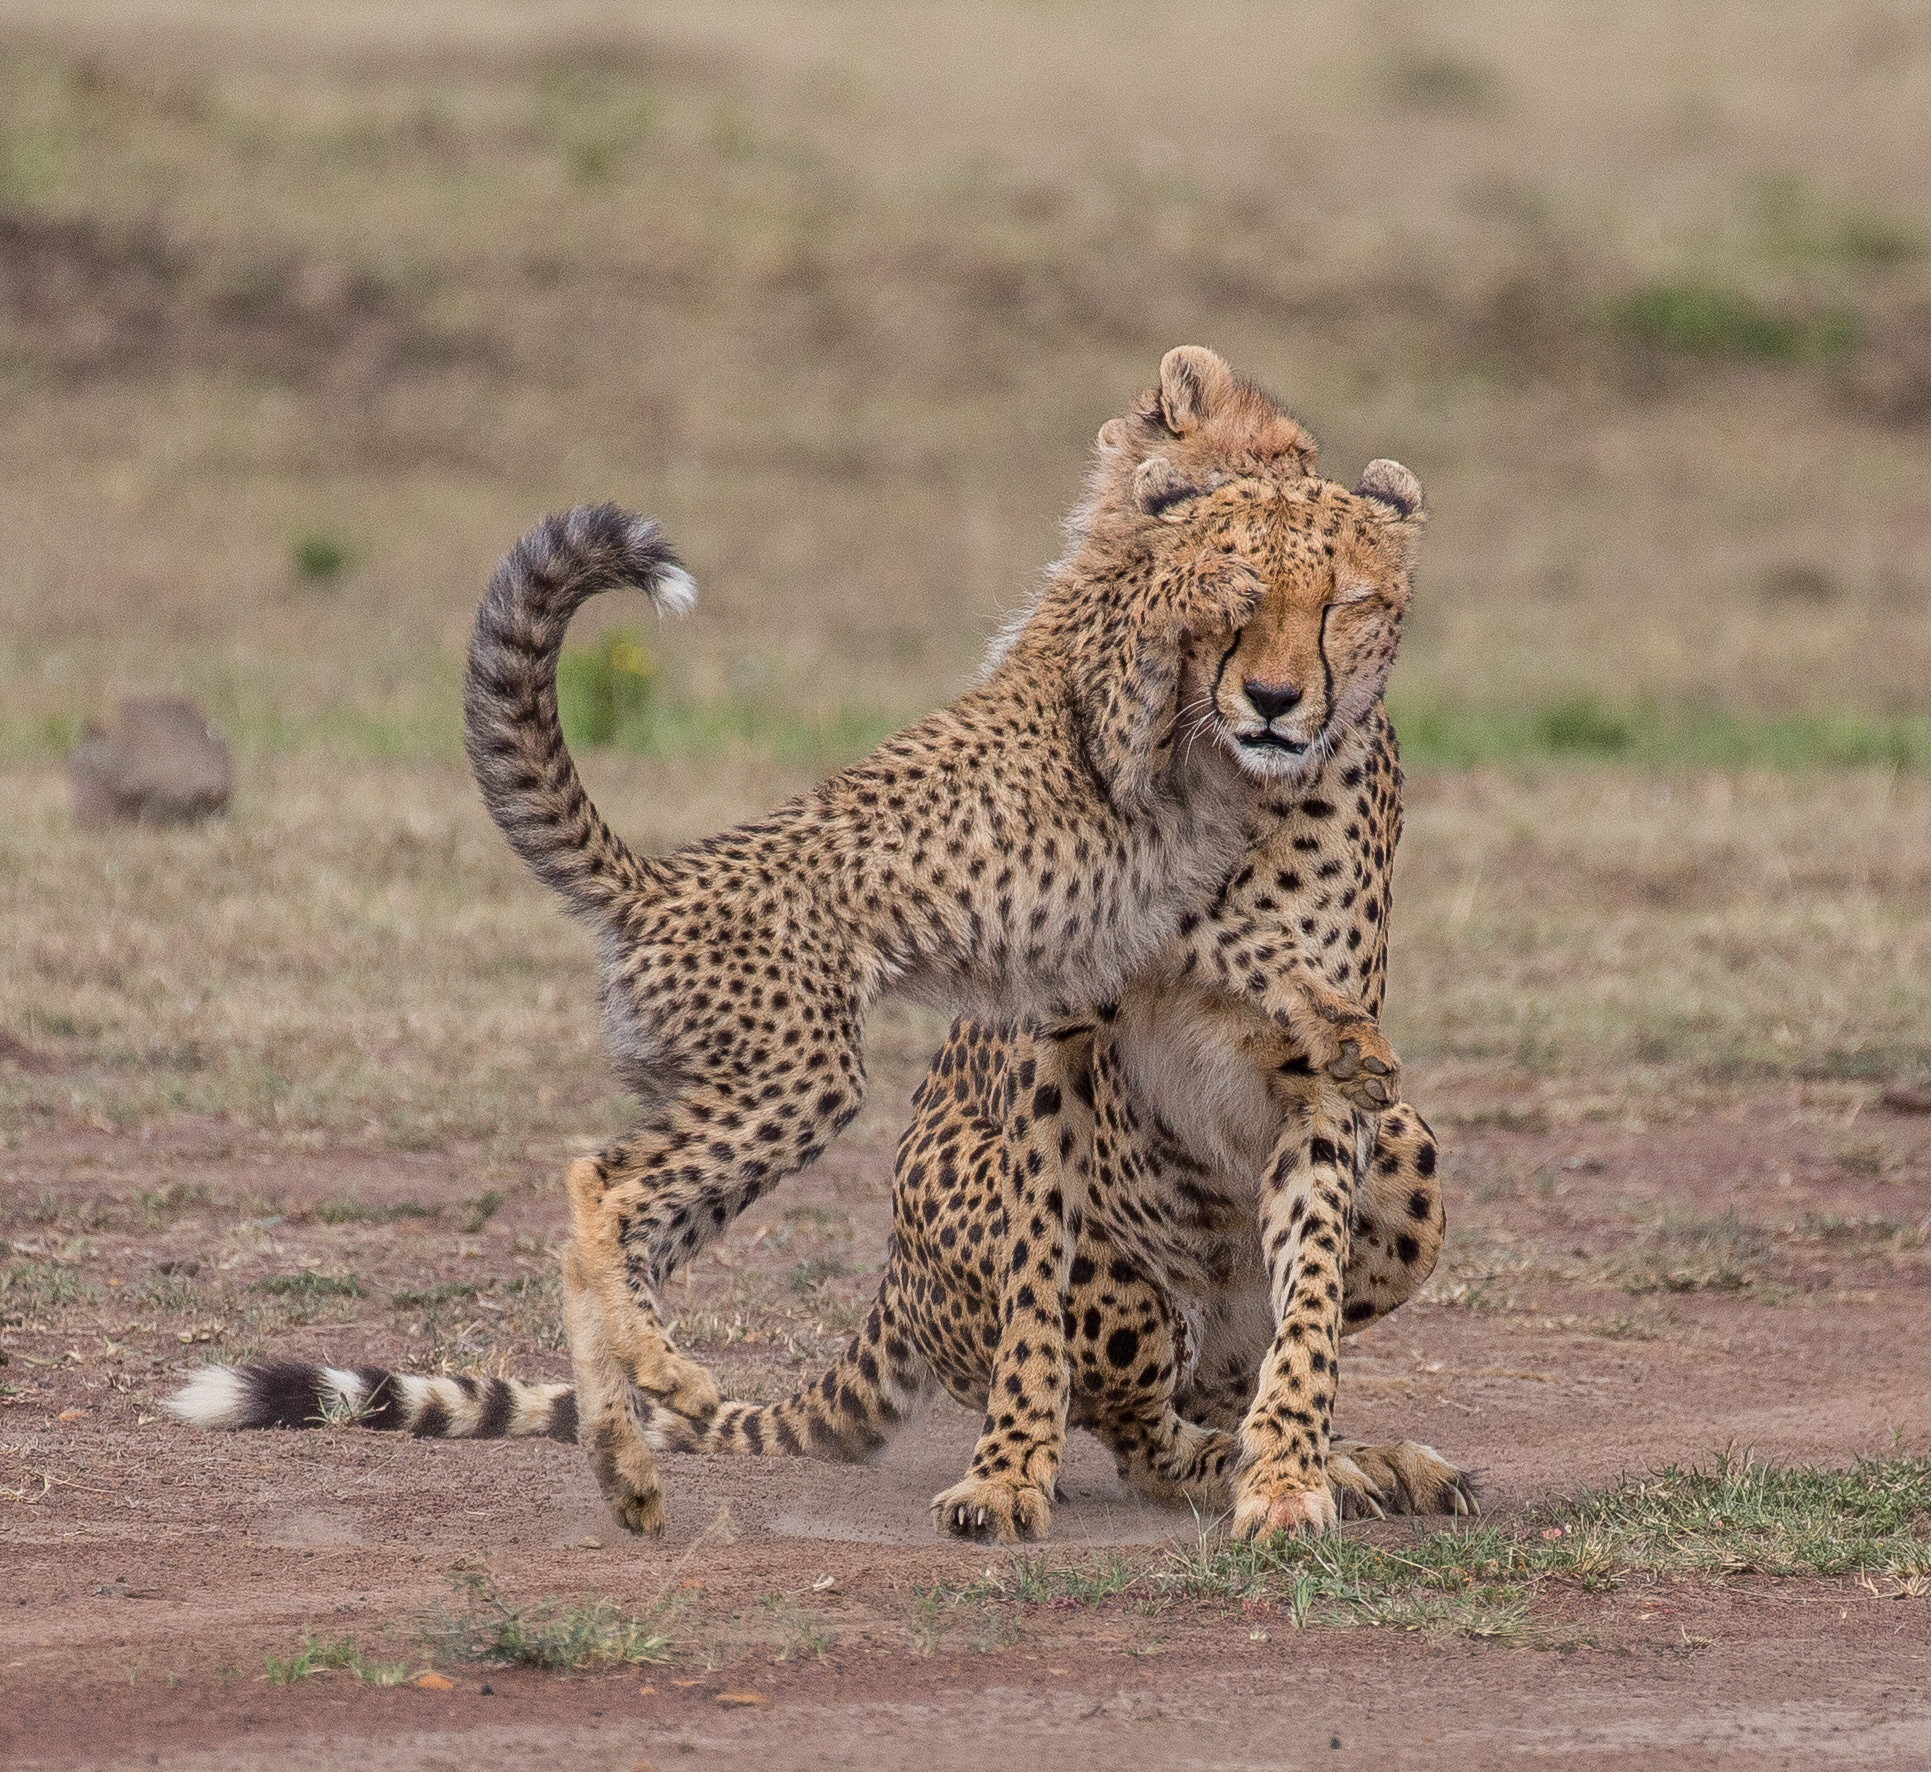 cheetah cub in a cute moment with its cheetah mom 